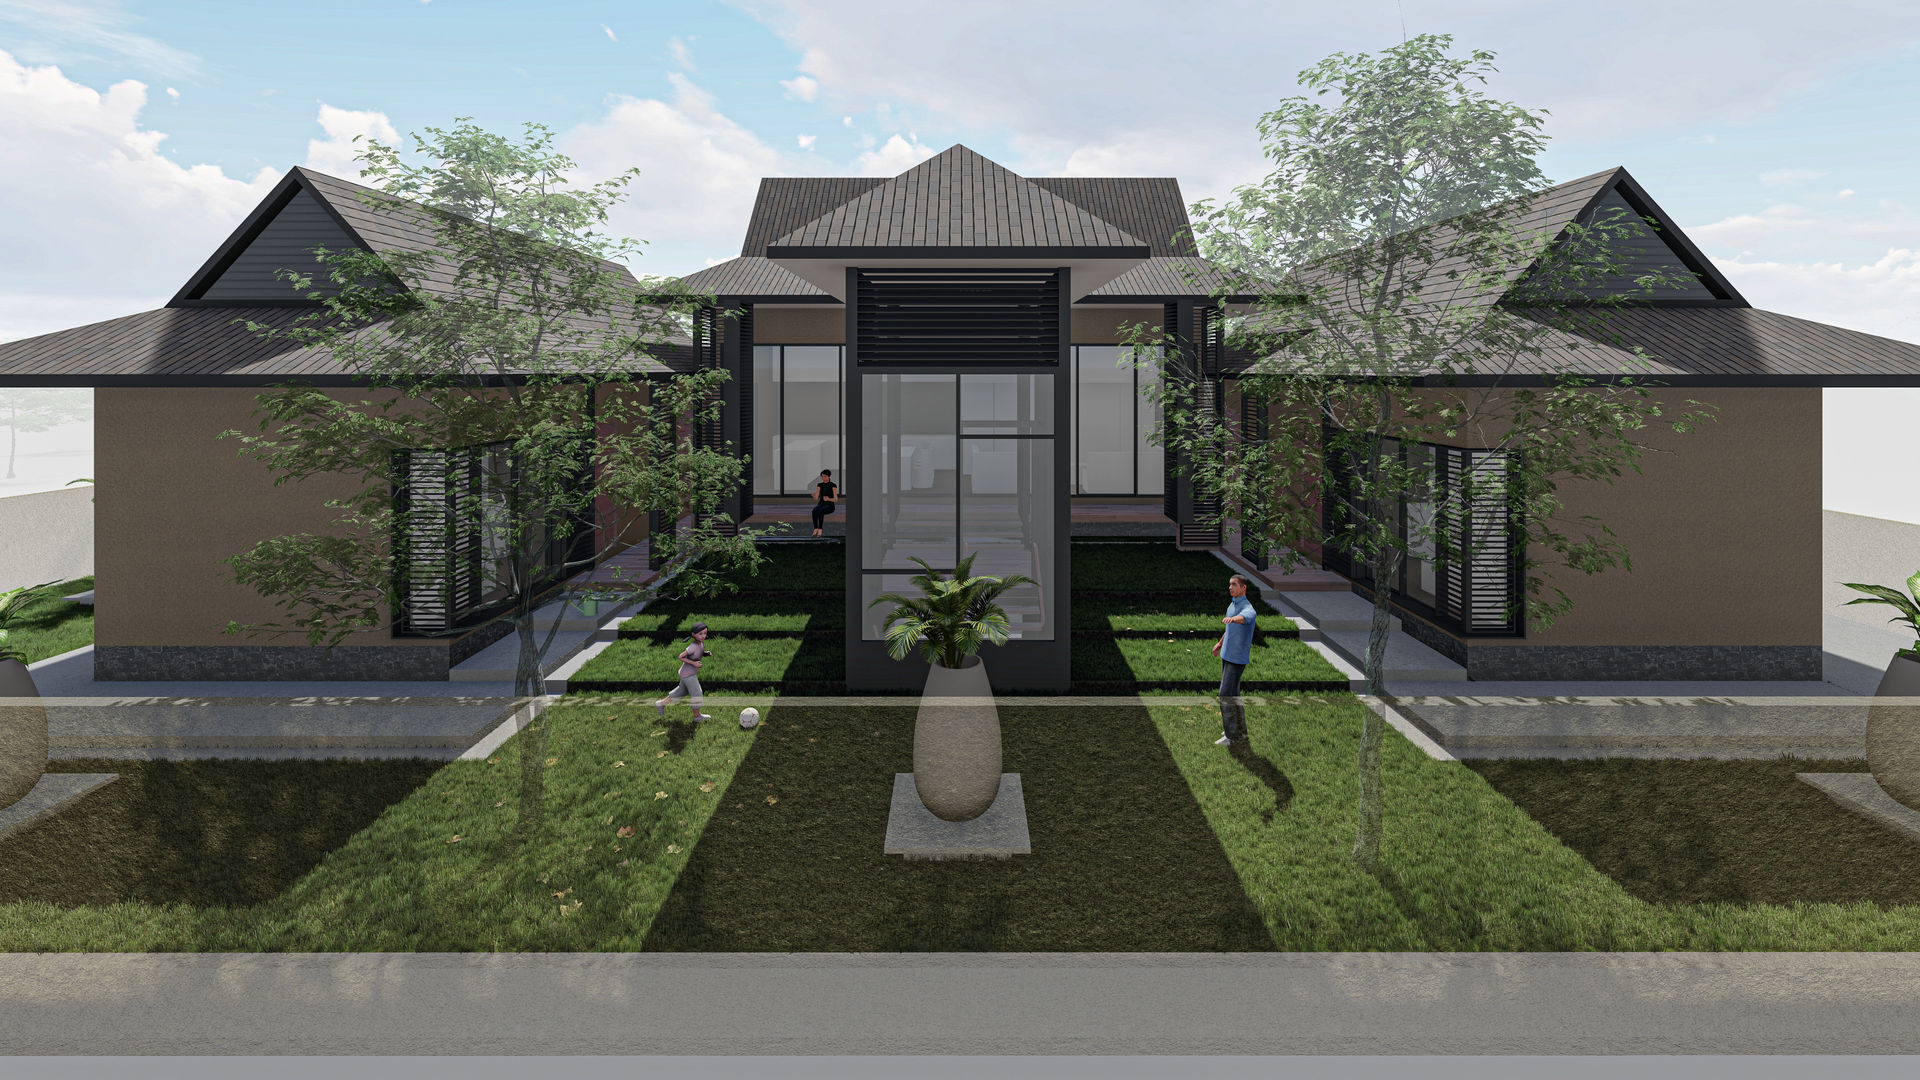 Internal Courtyard With Entrance to Sub-Basement Carpark Vision Design - Sarawak Garden Shed اینٹوں